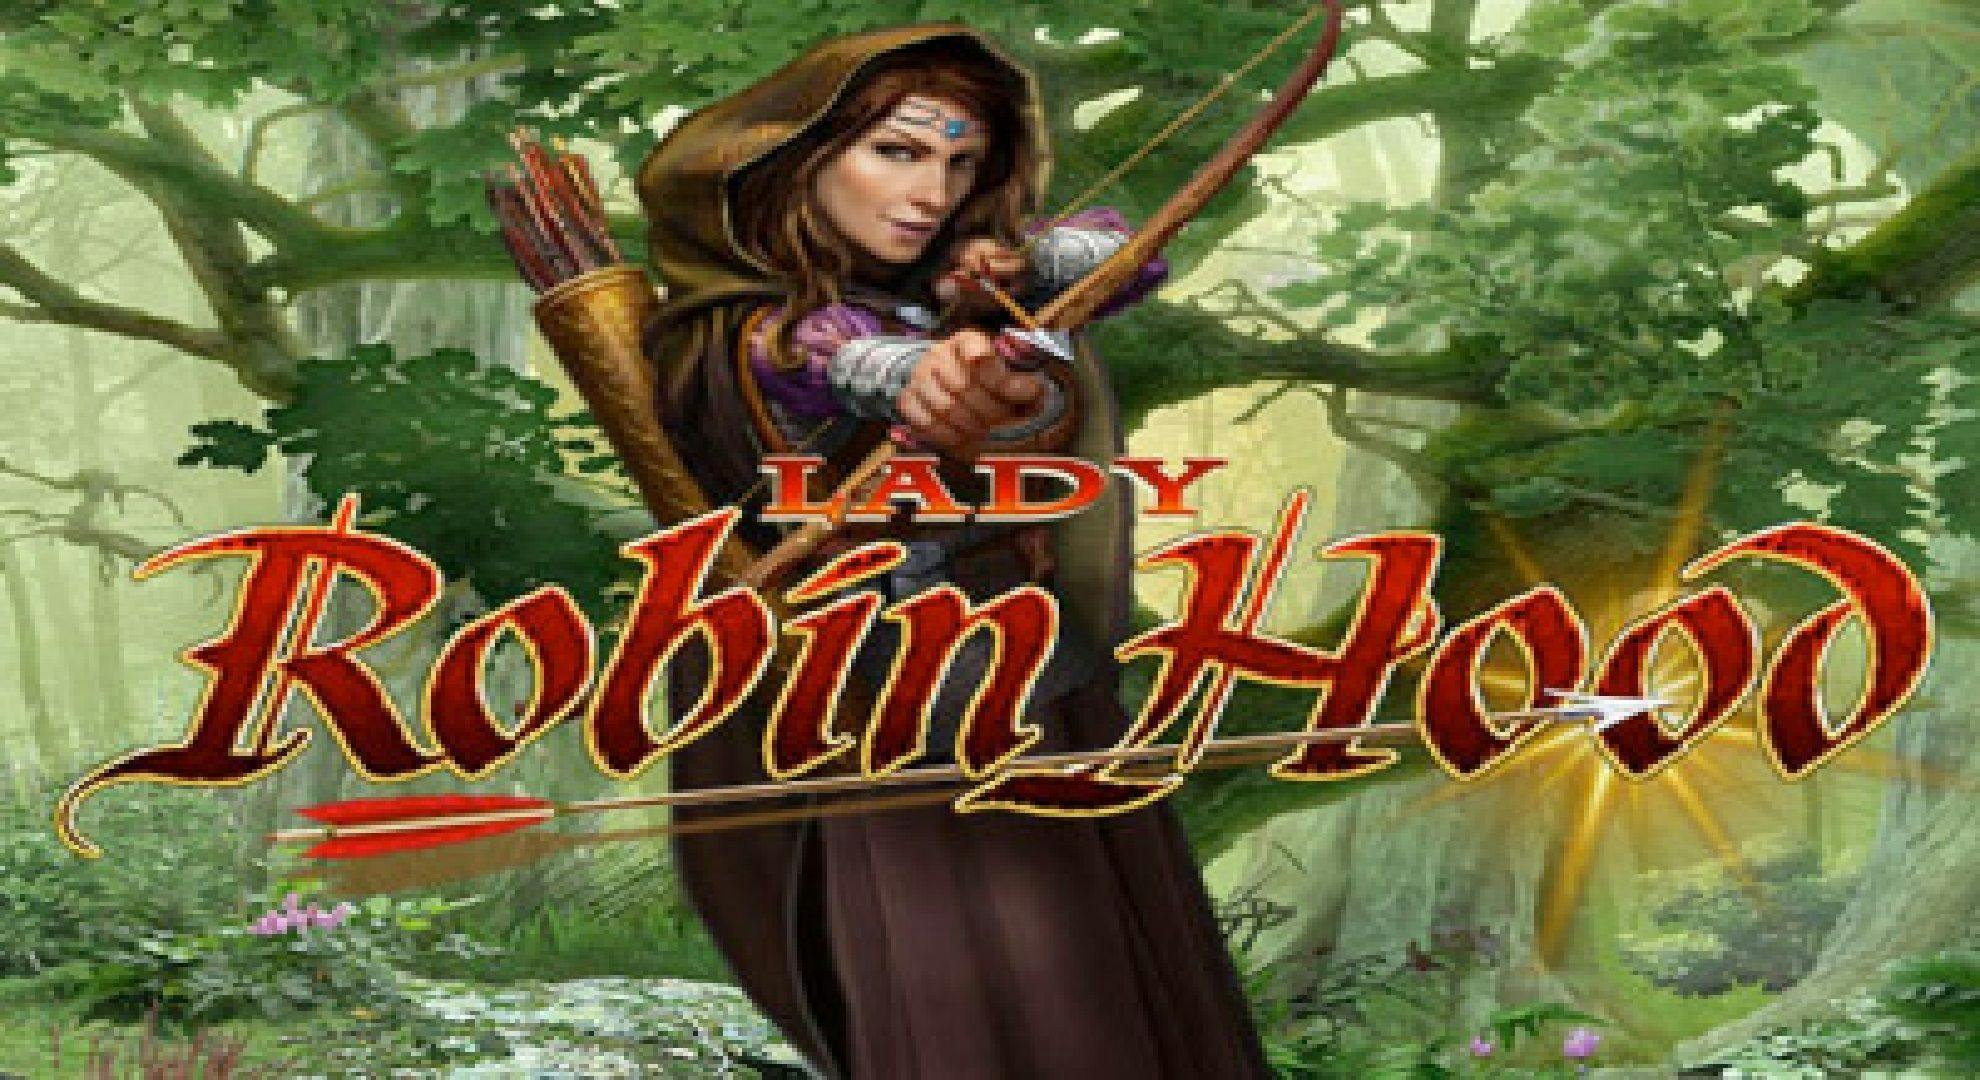 Lady Robin Hood Slot Online Free Play